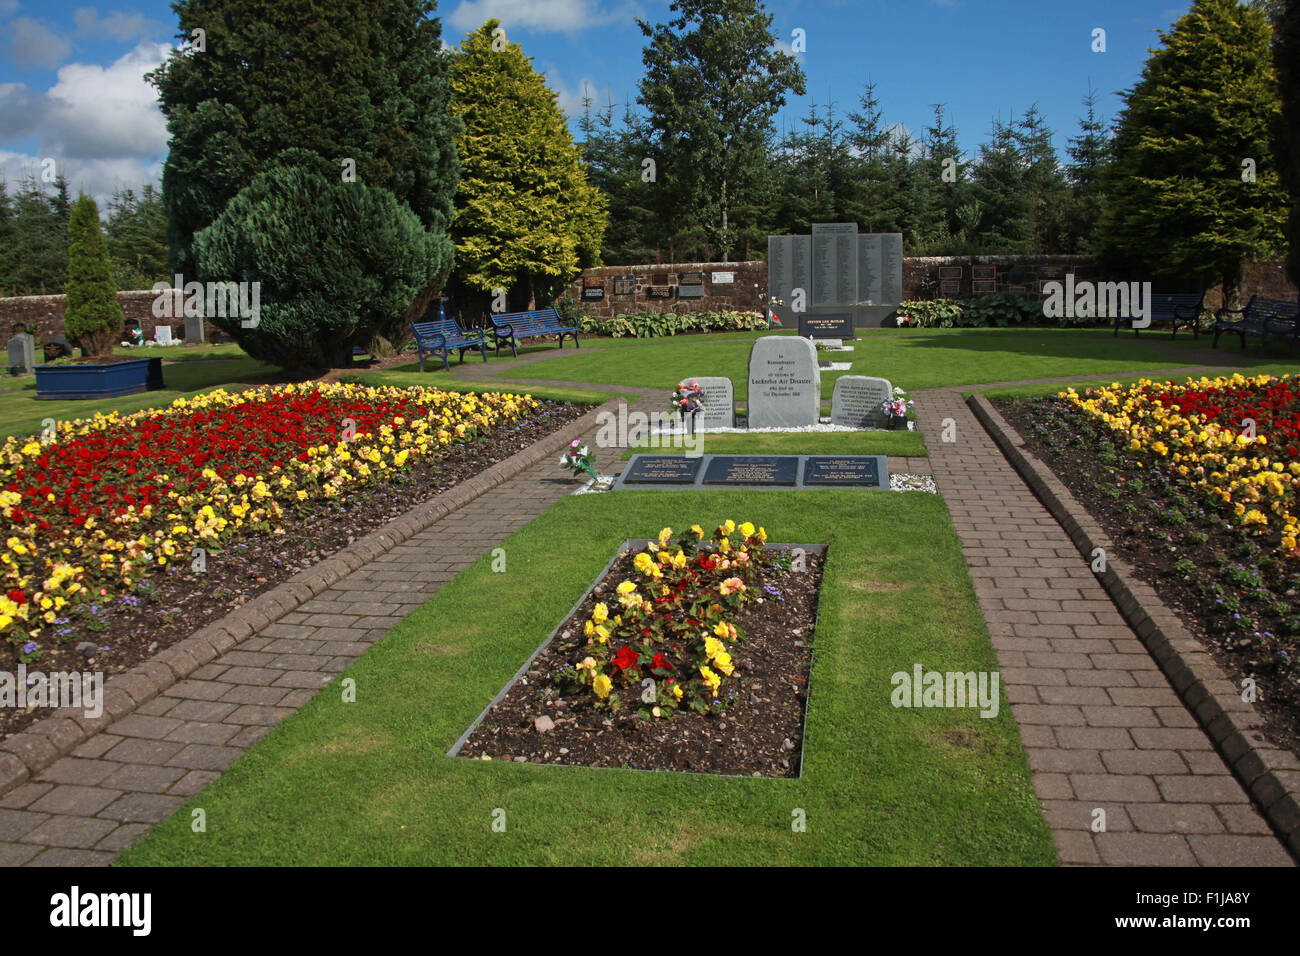 Lockerbie PanAm103 In Rimembranza Memorial,Scozia Scotland Foto Stock